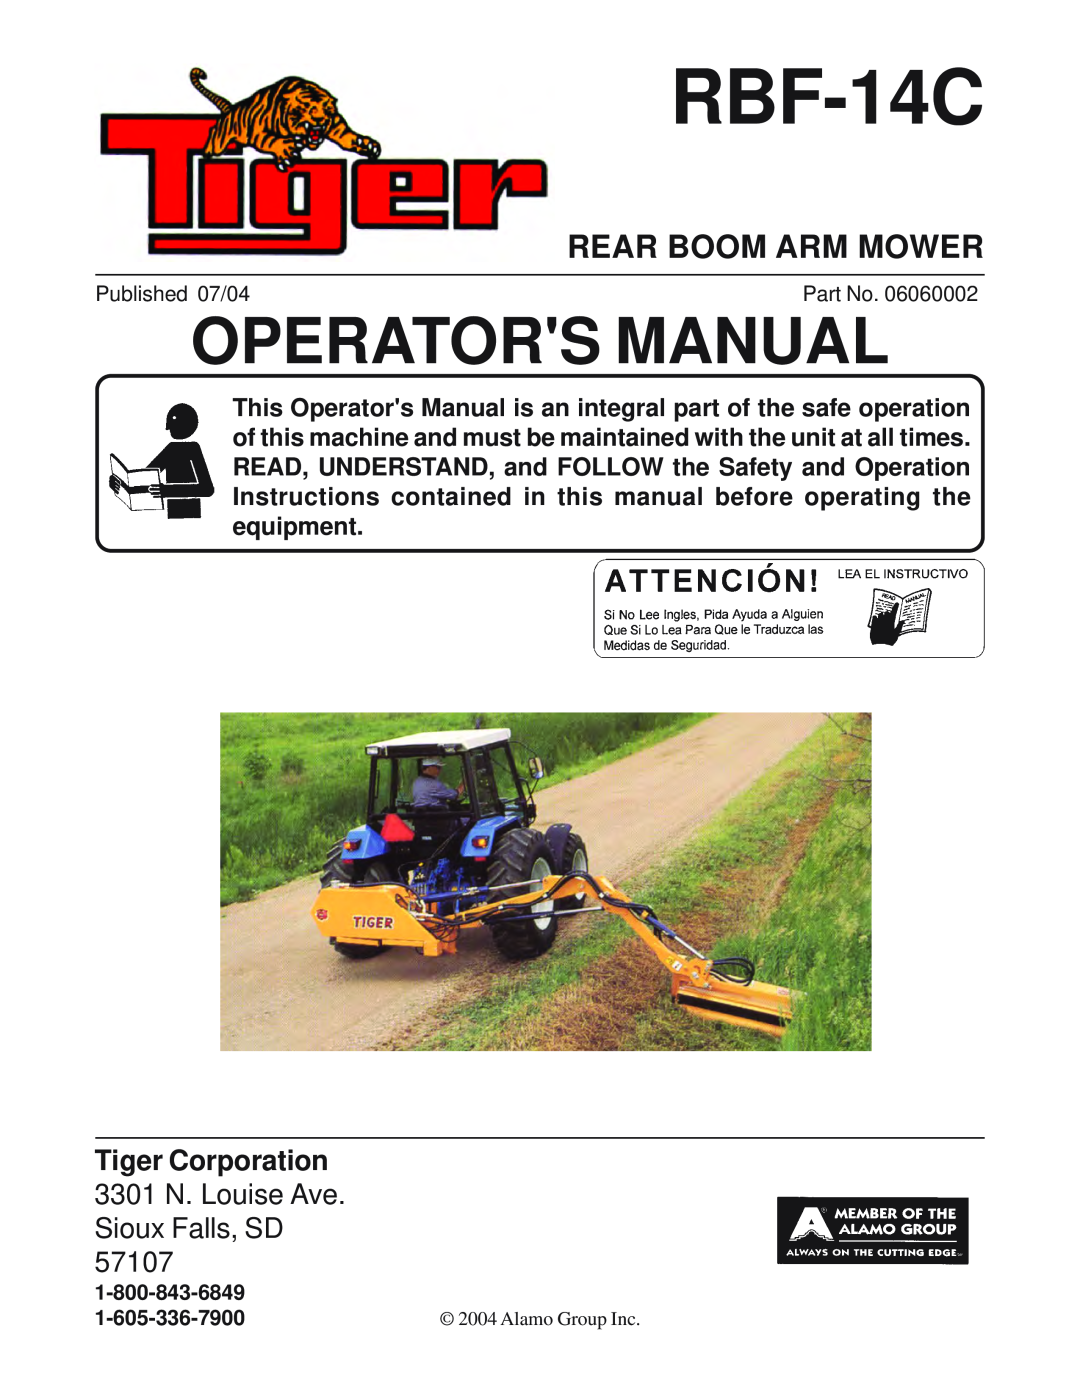 Tiger RBF-14C manual Rear Boom Arm Mower, Operators Manual 